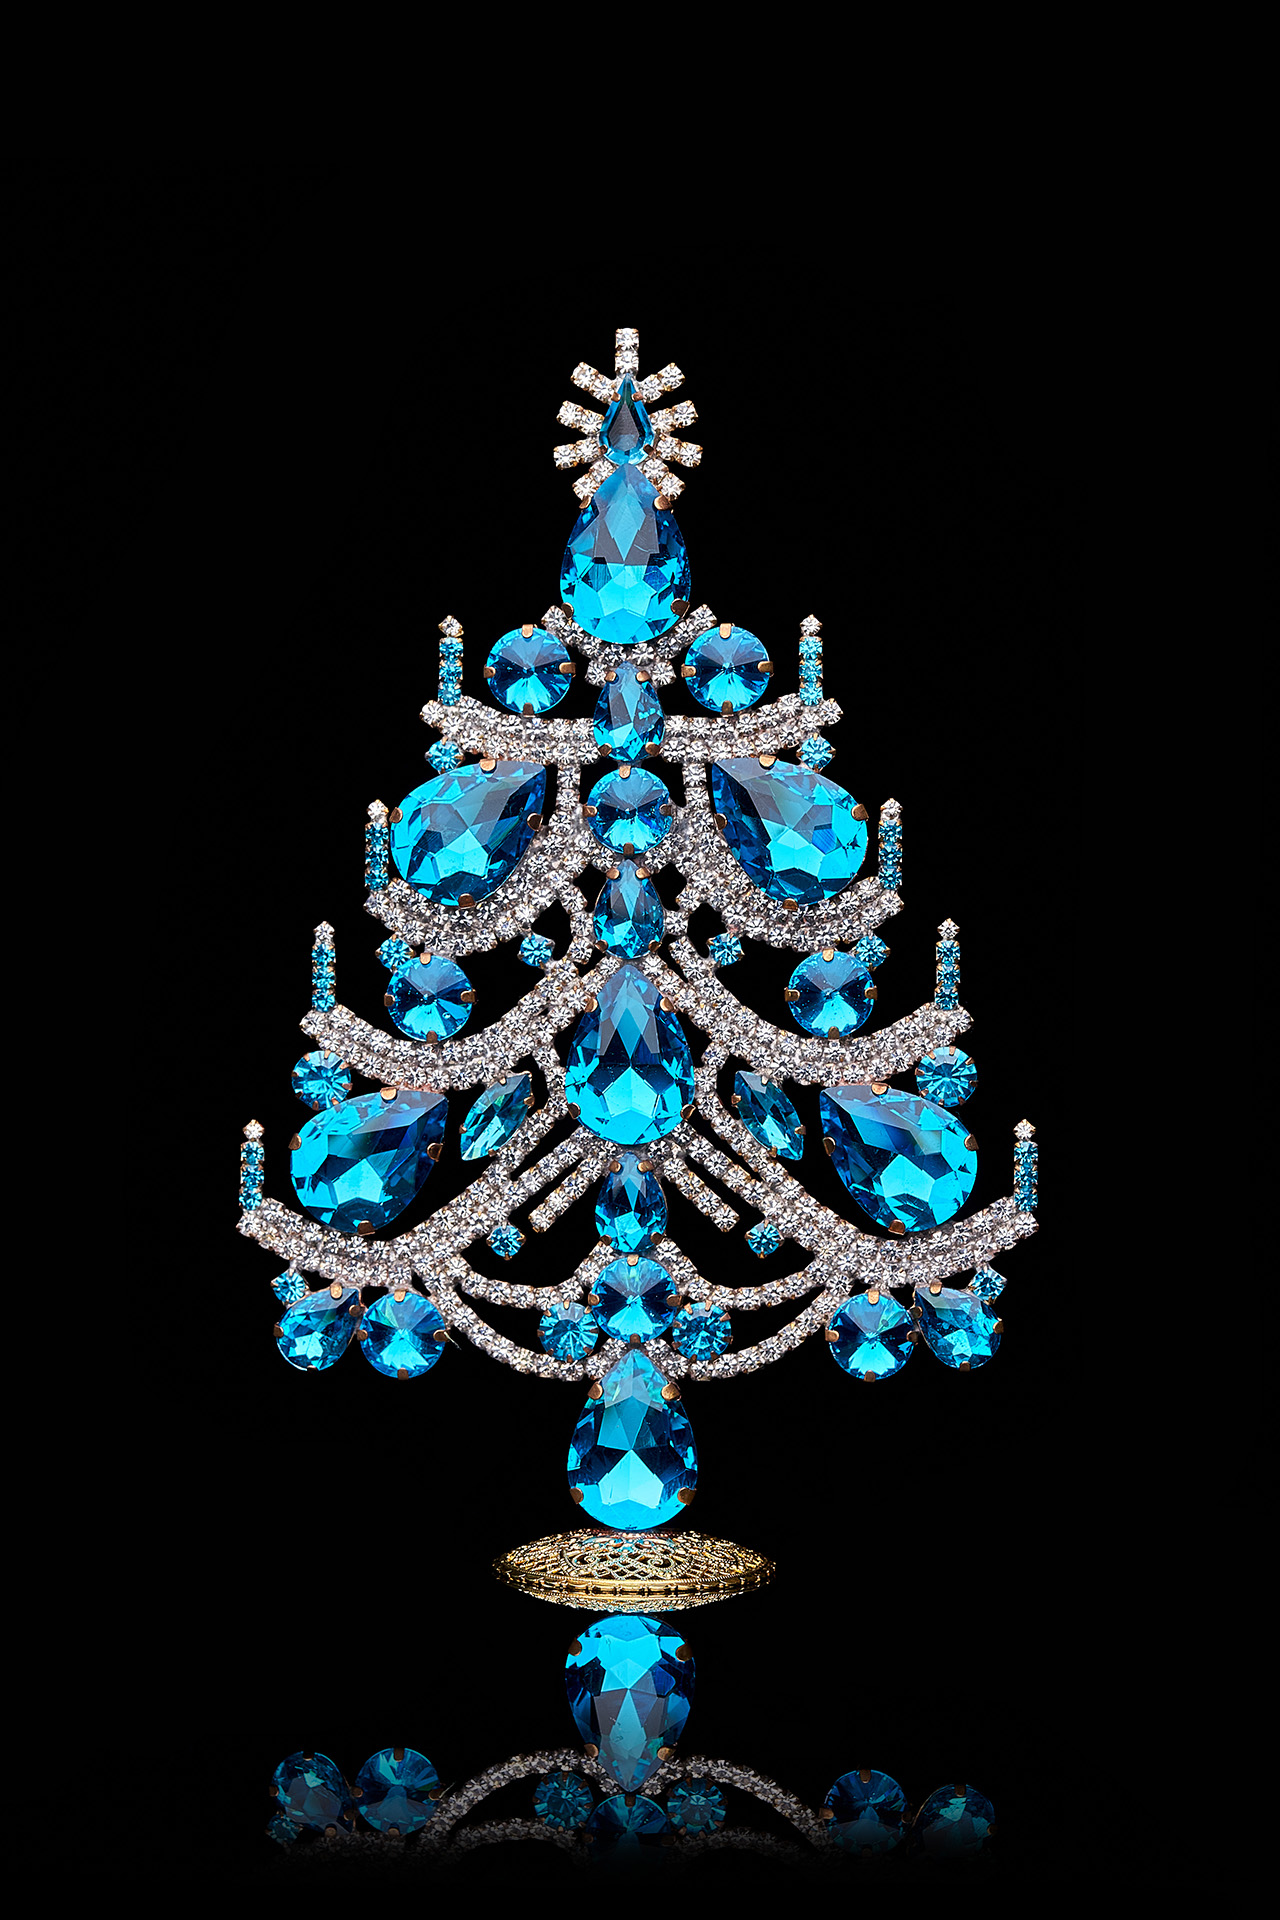 Charming handcrafted tabletop Xmas tree - with aqua rhinestone crystals